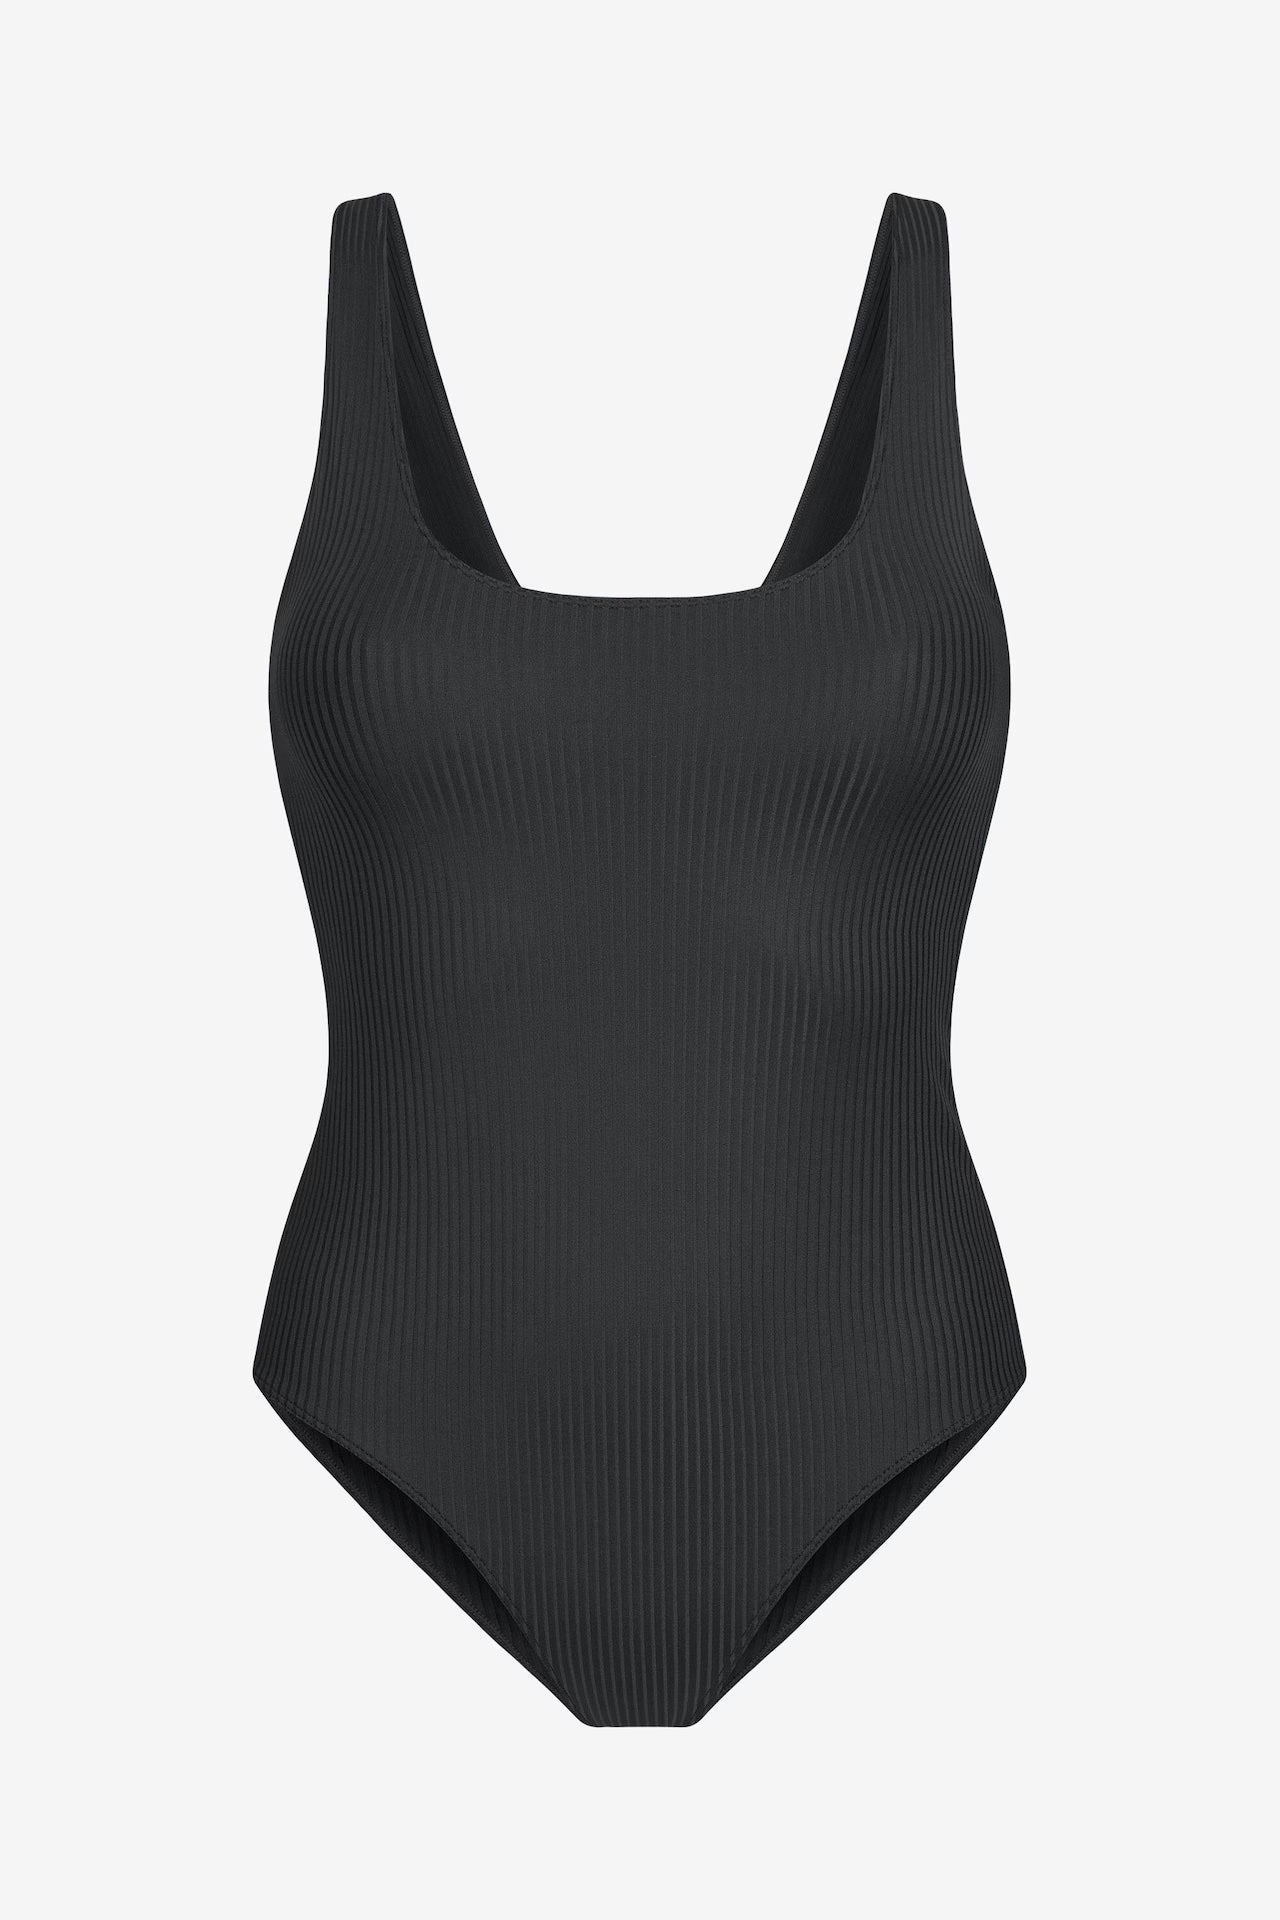 swimsuit black